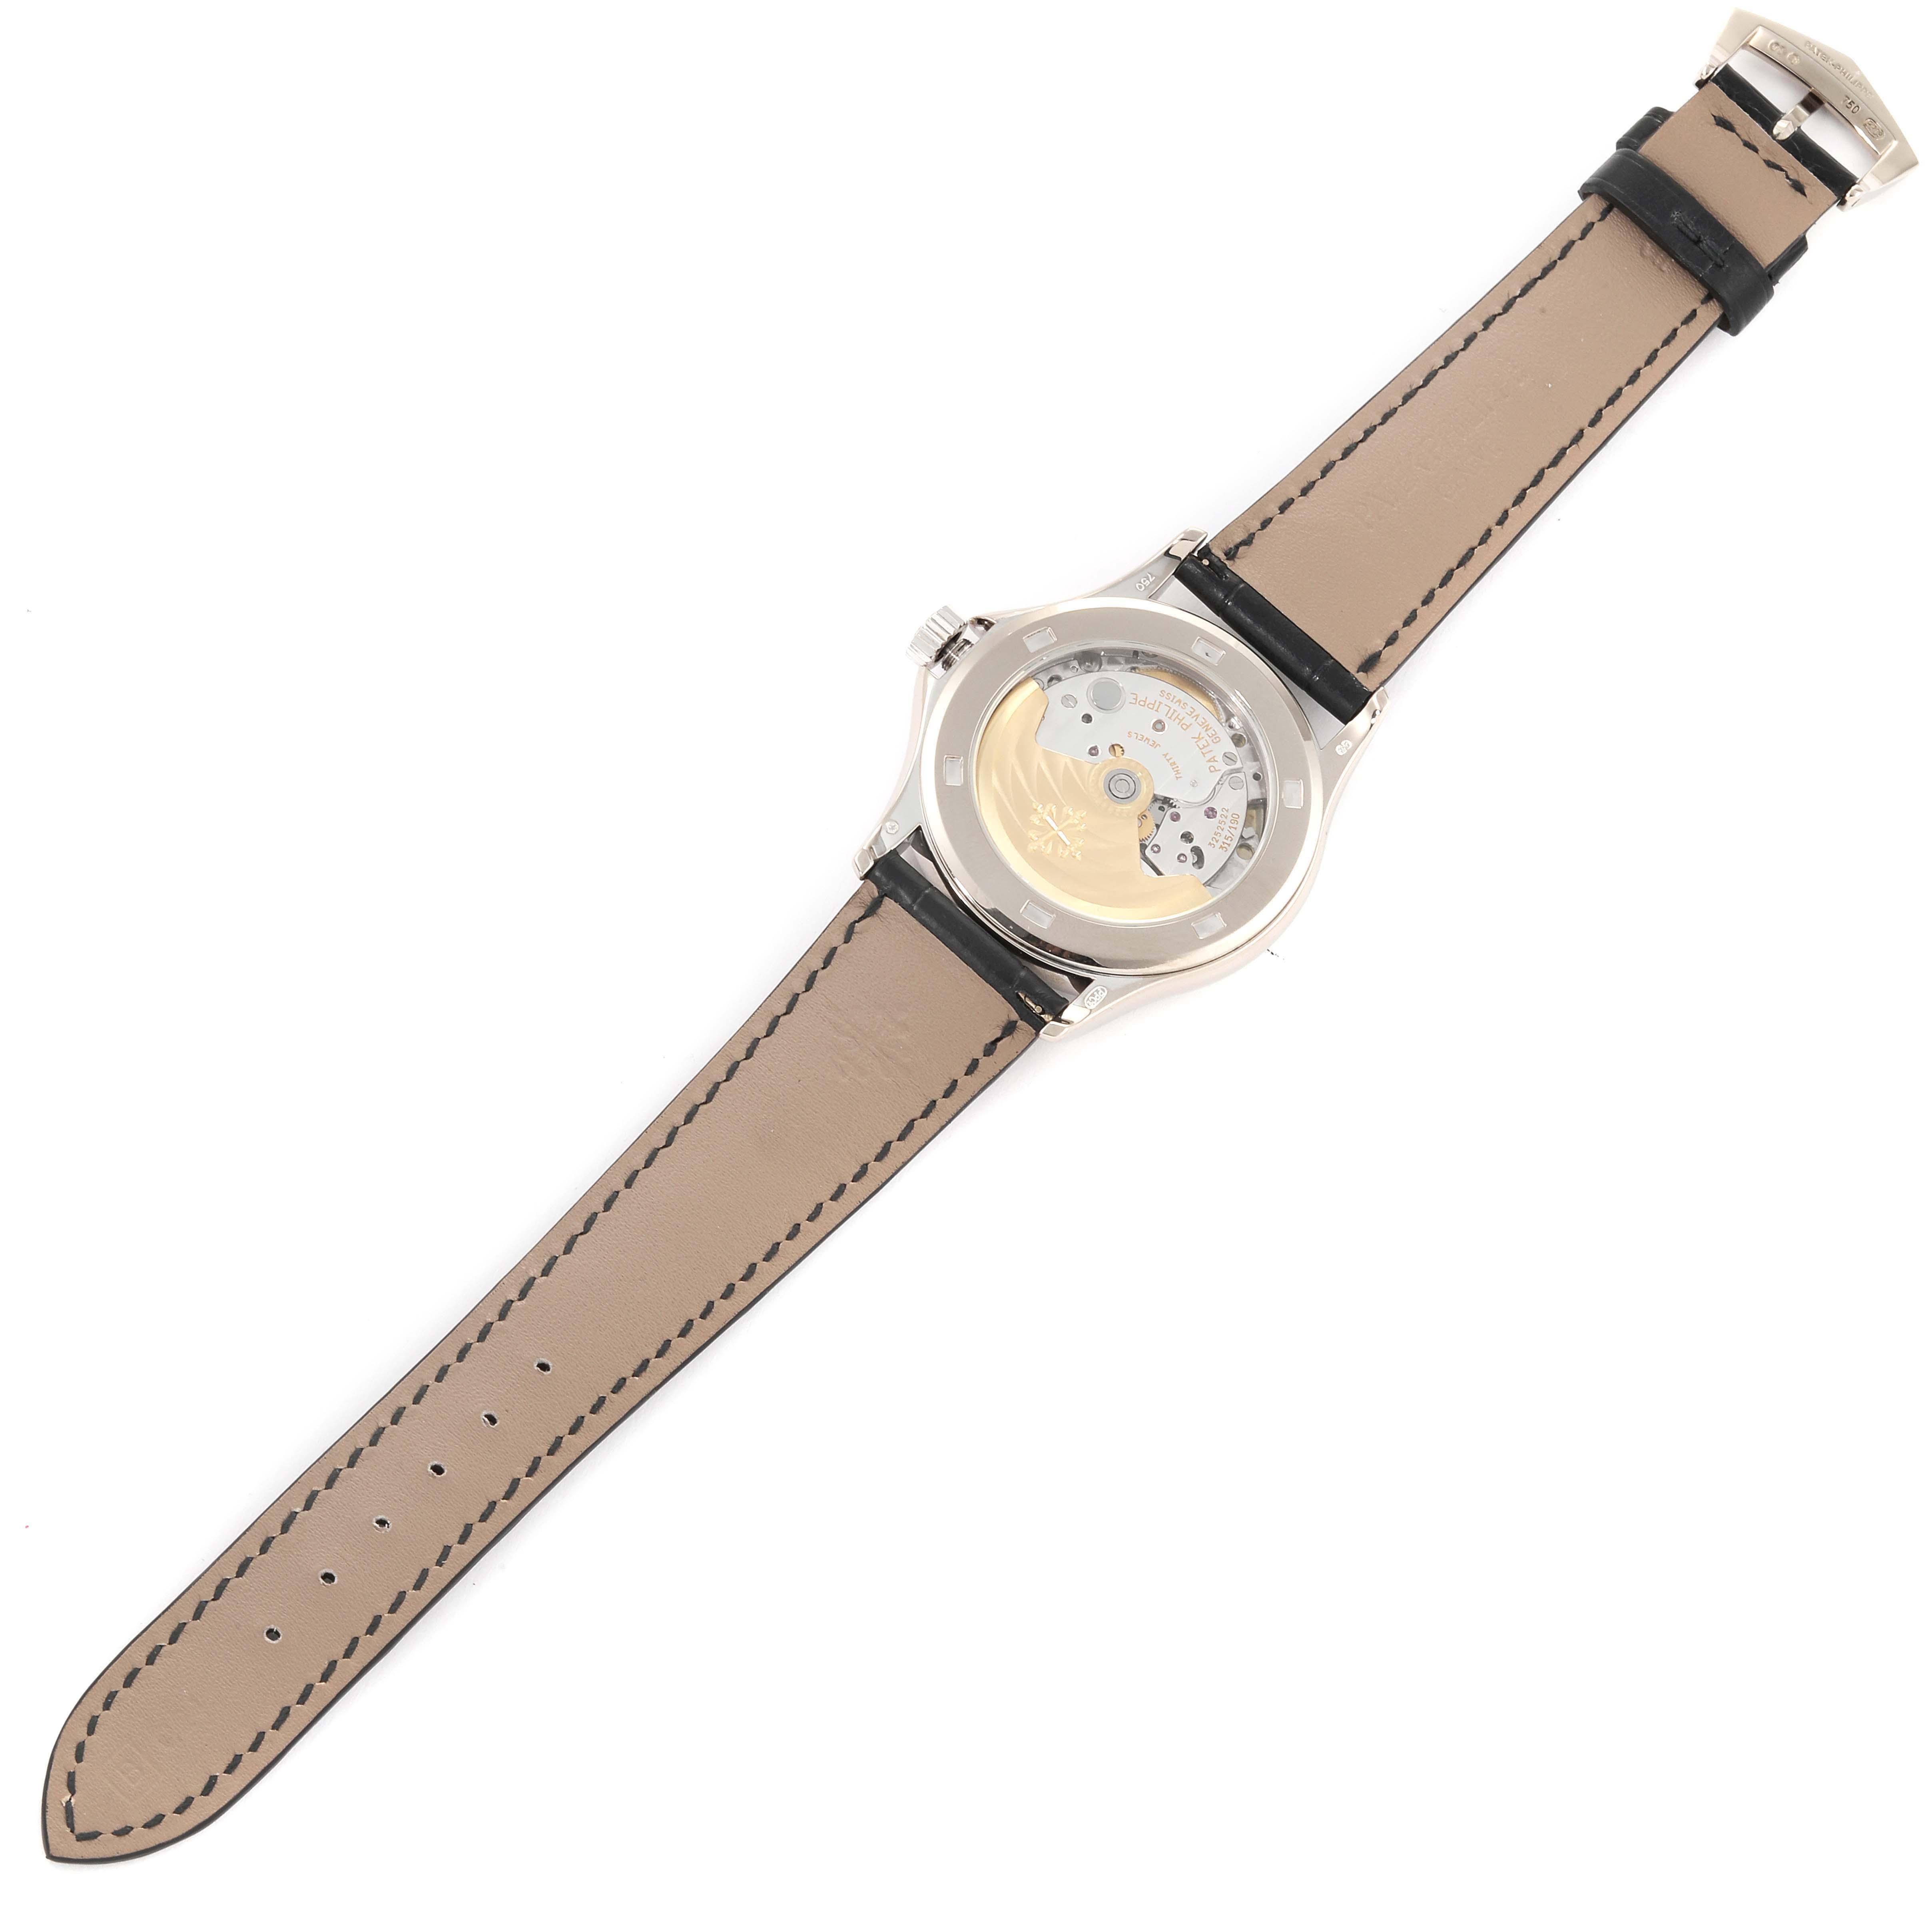 Patek Philippe Calatrava White Gold Automatic Mens Watch 5117 For Sale 3